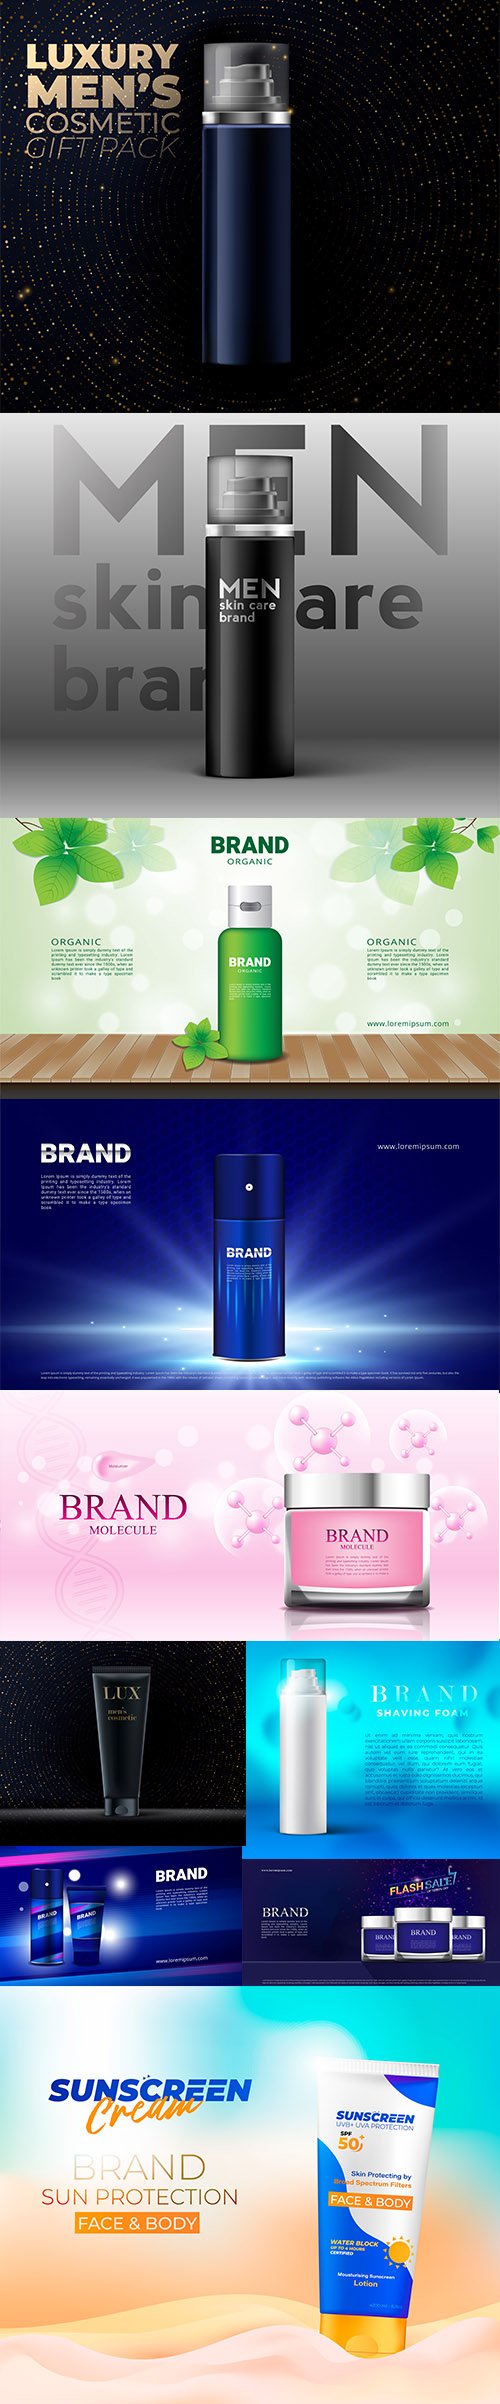 Luxury Cosmetic Advertising Illustrations